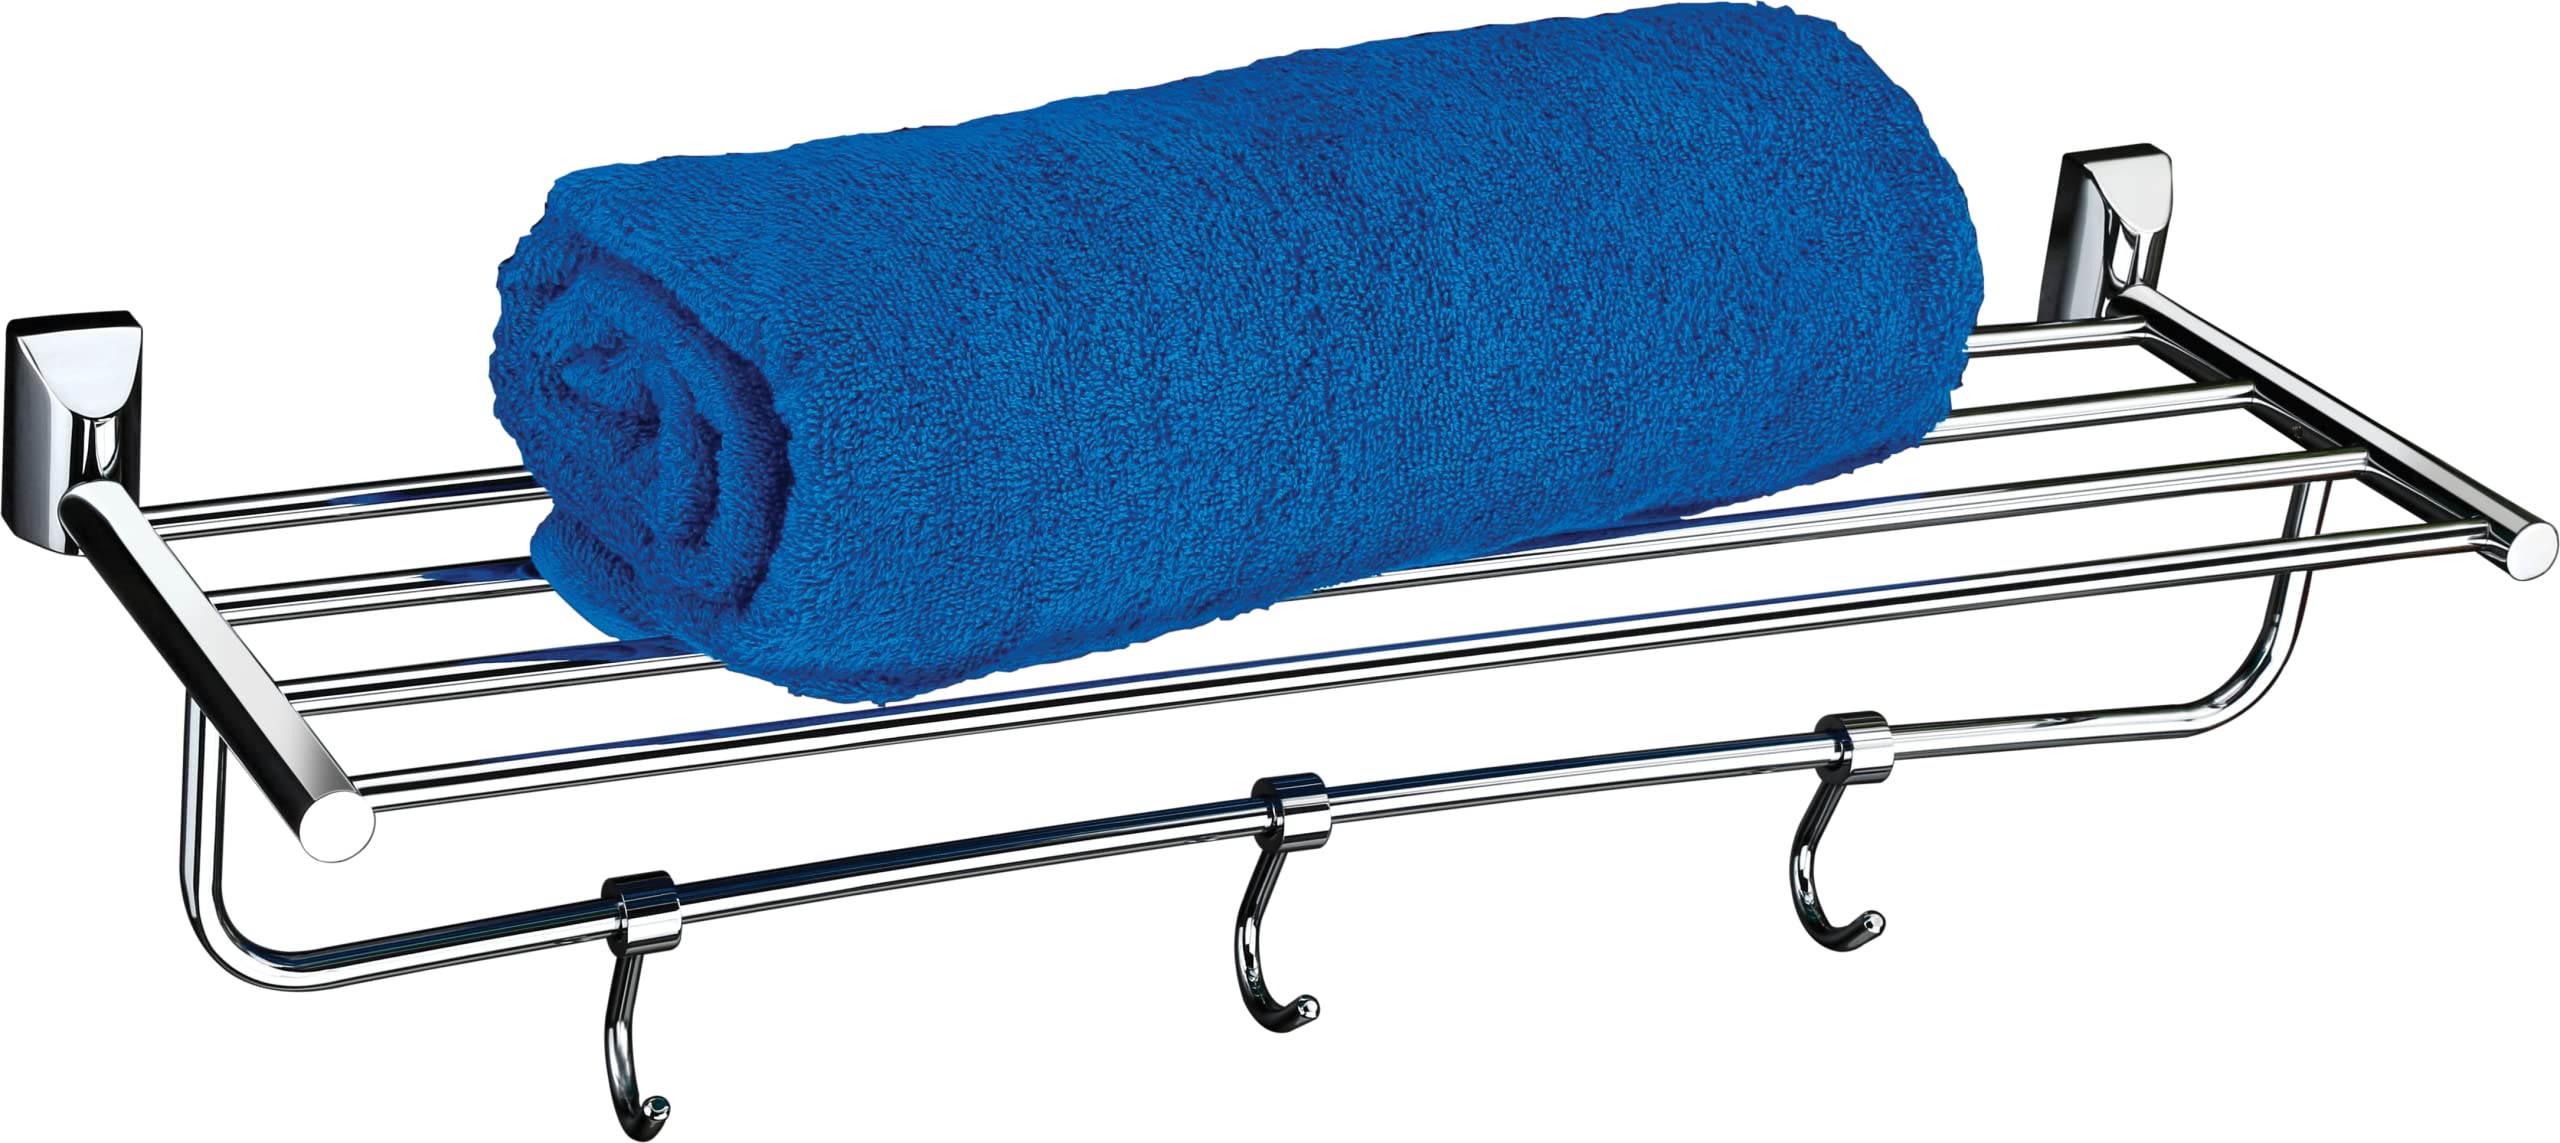 Plantex Fully Brass Smero Towel Rack for Bathroom/Towel Stand/Hanger/Bathroom Accessories - 24 Inch - Chrome (SU-5131)